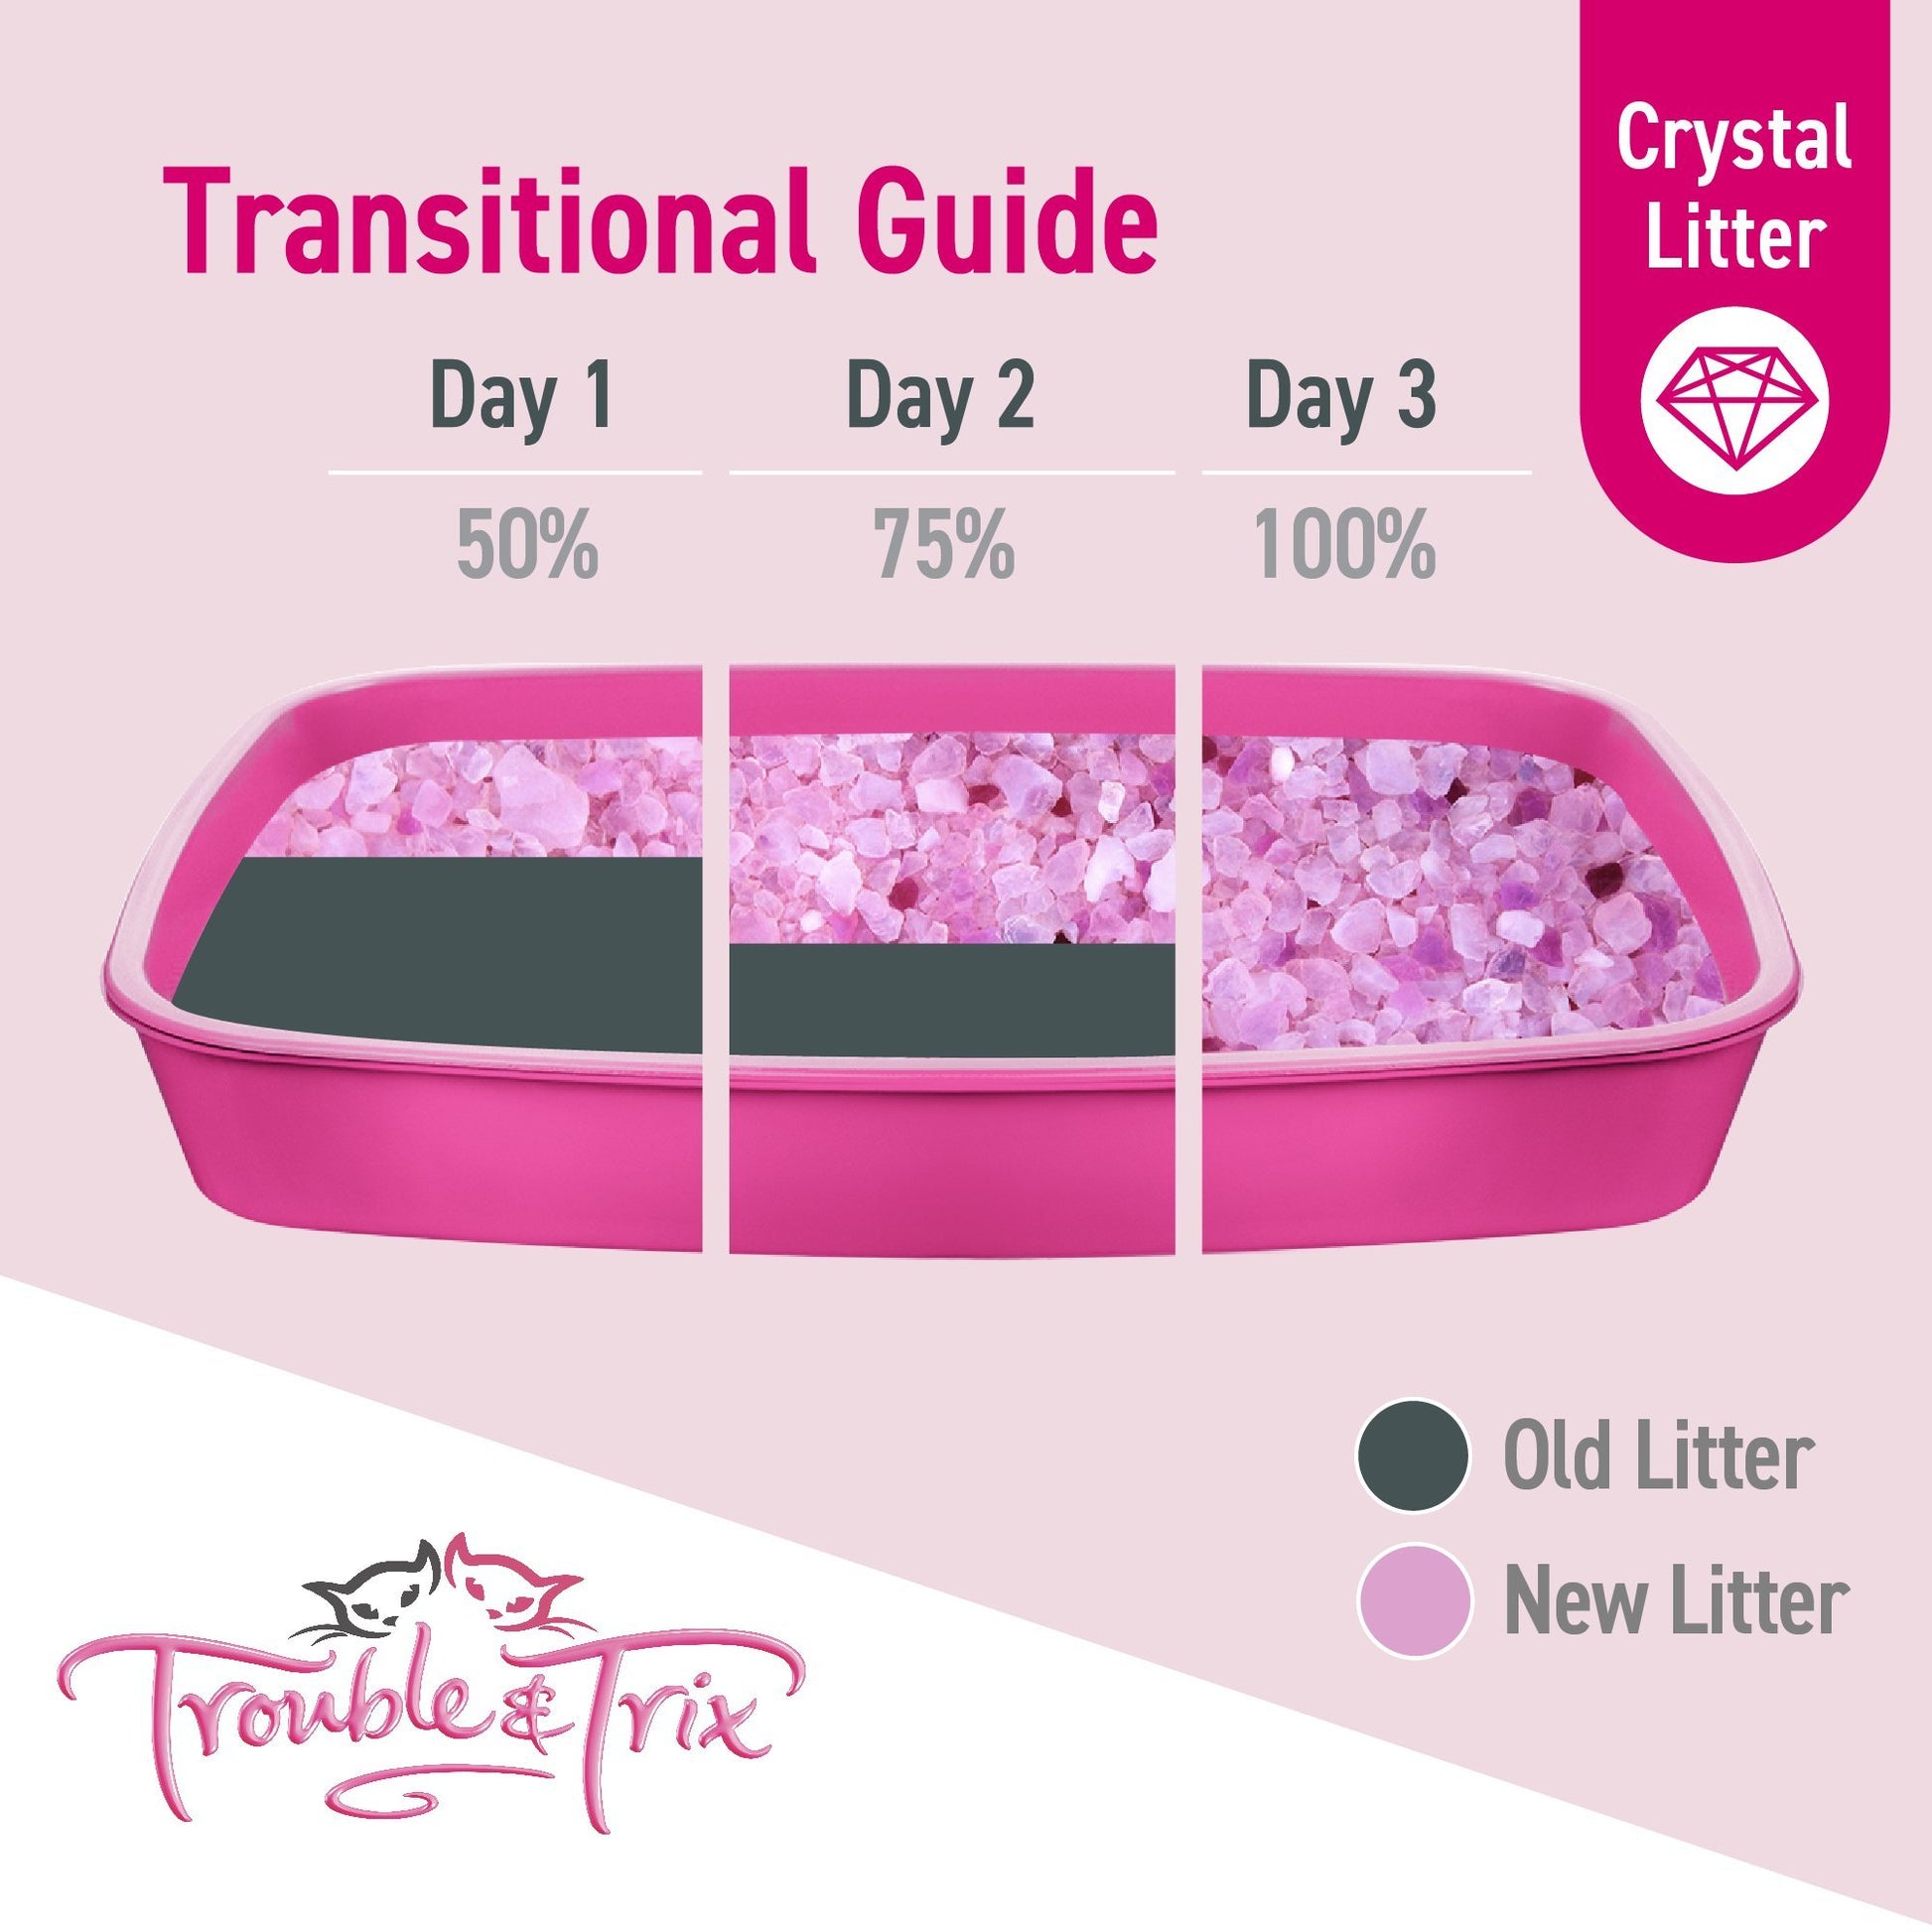 Trouble & Trix Litter Crystals Anti Bacteria 7 Litre - Woonona Petfood & Produce